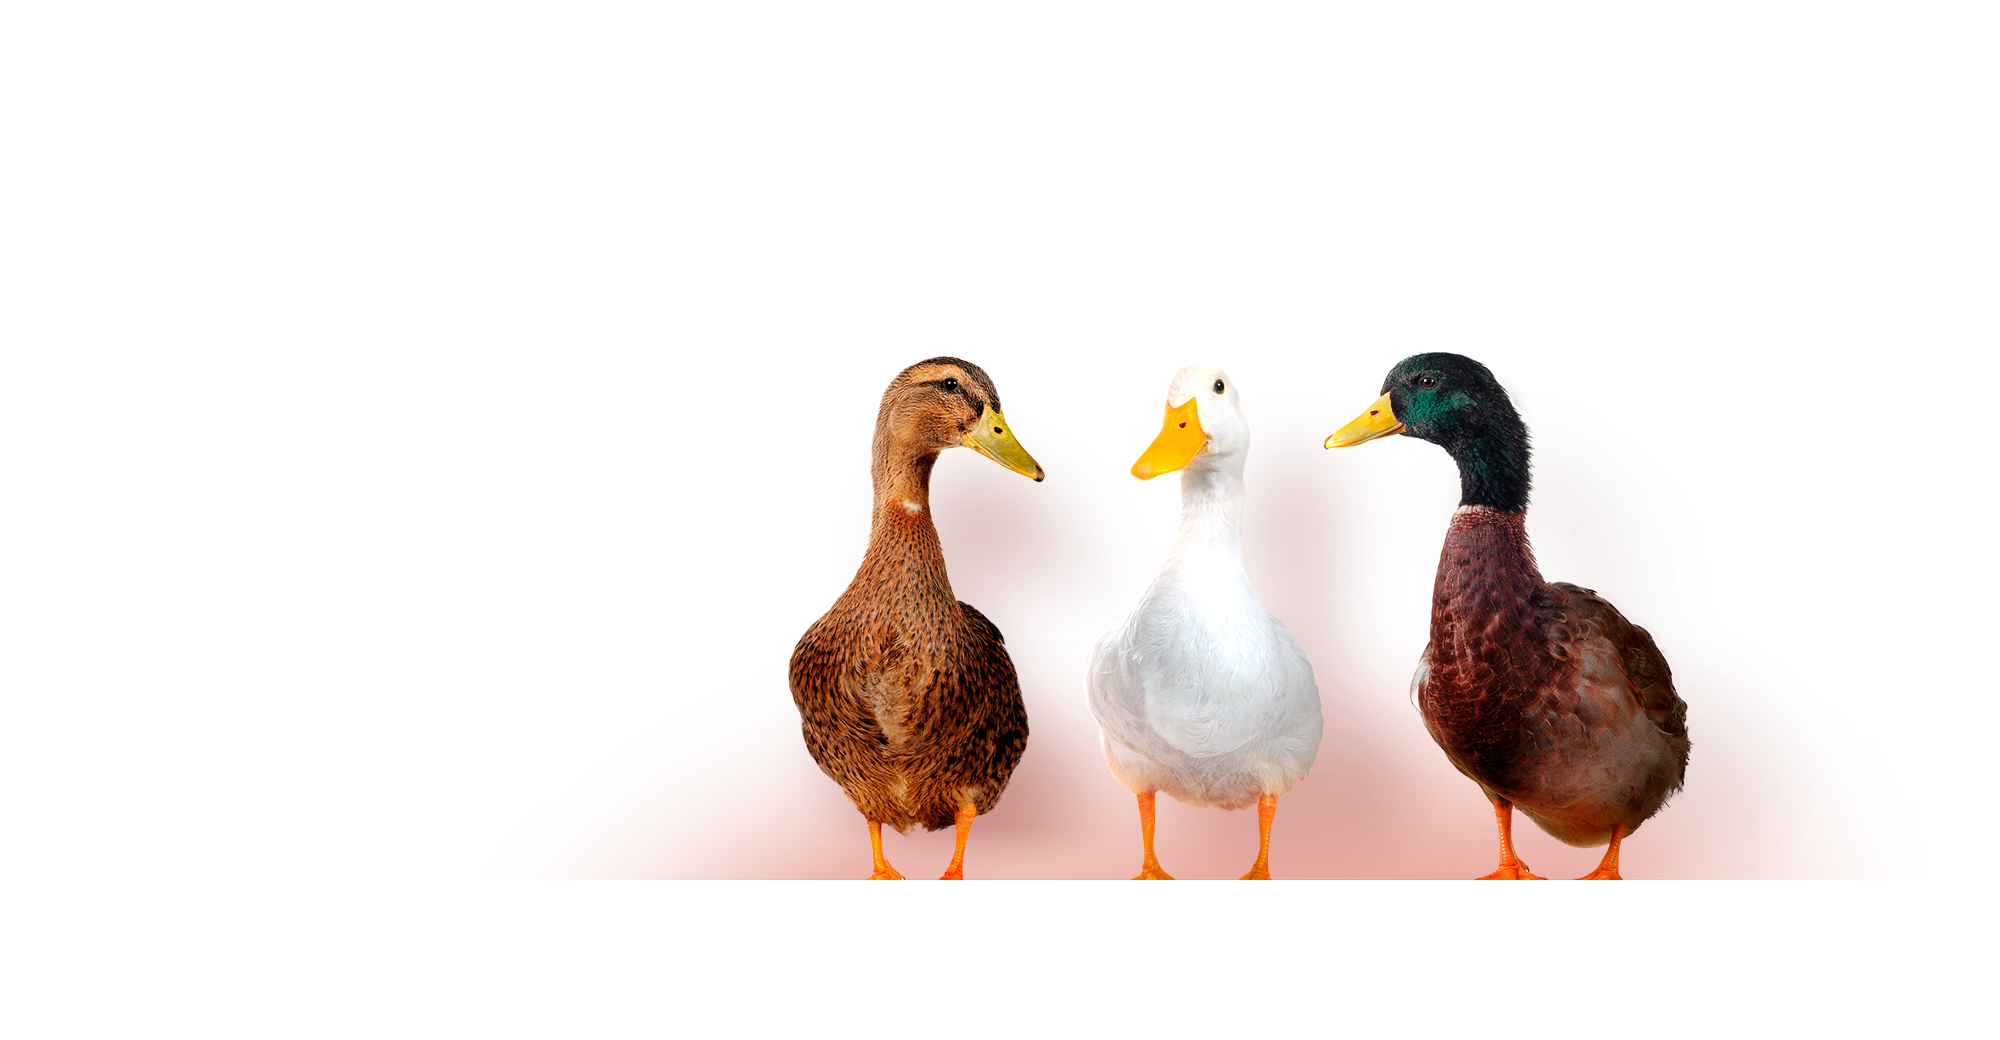 Literally, three ducks in a row!